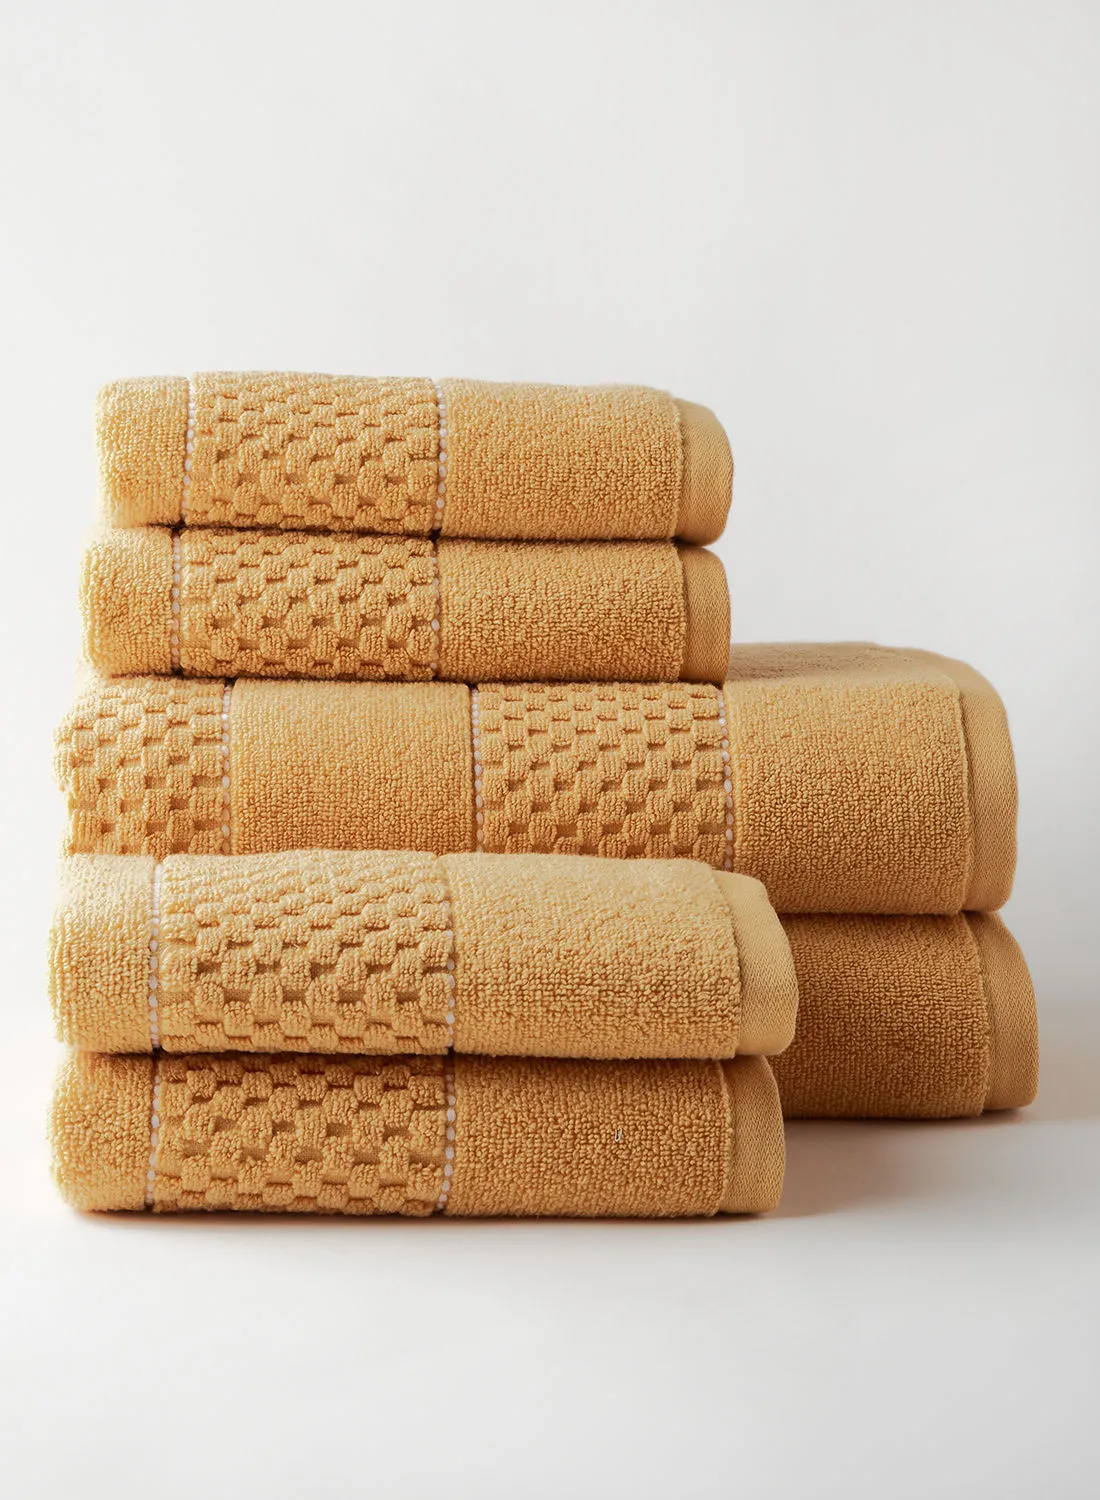 ebb & flow 6 Piece Bathroom Towel Set - 500 GSM - 4 Hand Towel - 2 Bath Towel - Gold Color -Luxury Velvet Feel - Ultra Soft - Quick Dry